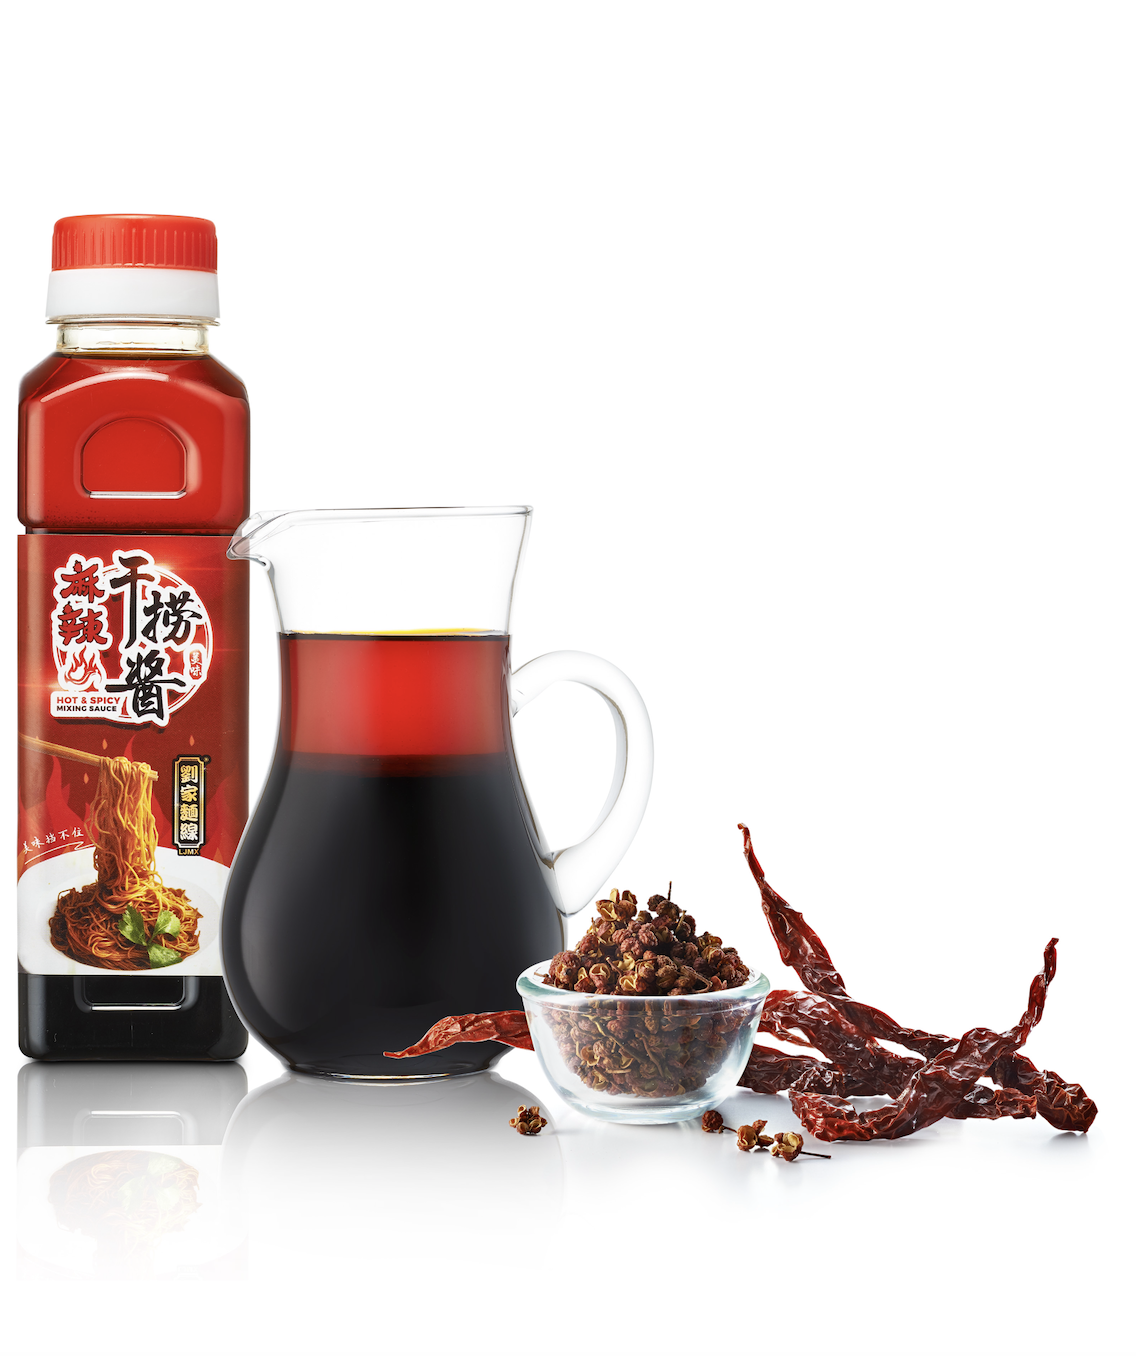 麻辣干捞酱Hot & Spicy Mixing Sauce 310gm